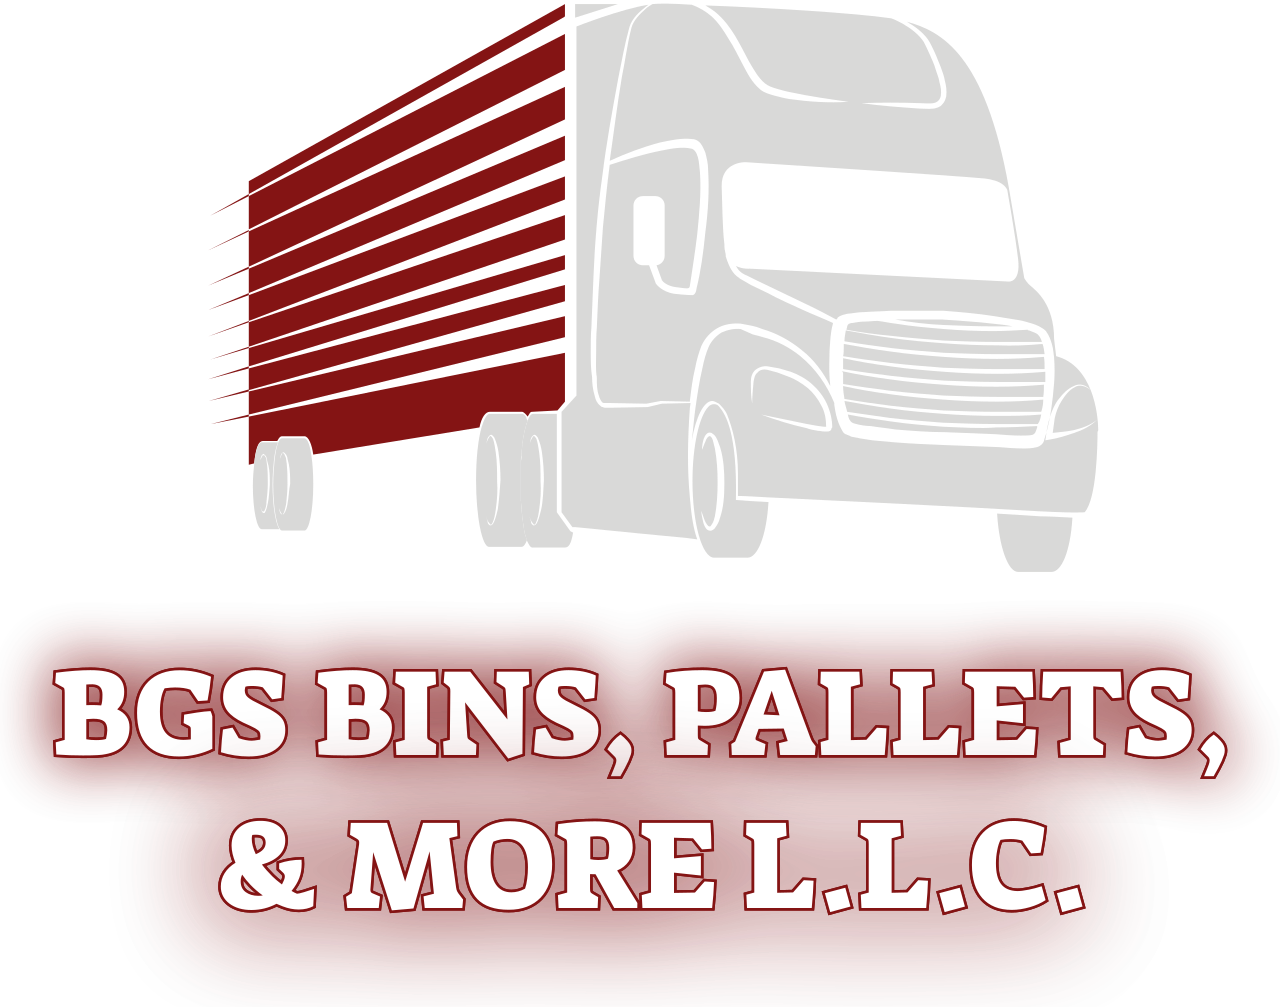 BGS Bins, Pallets, 's logo